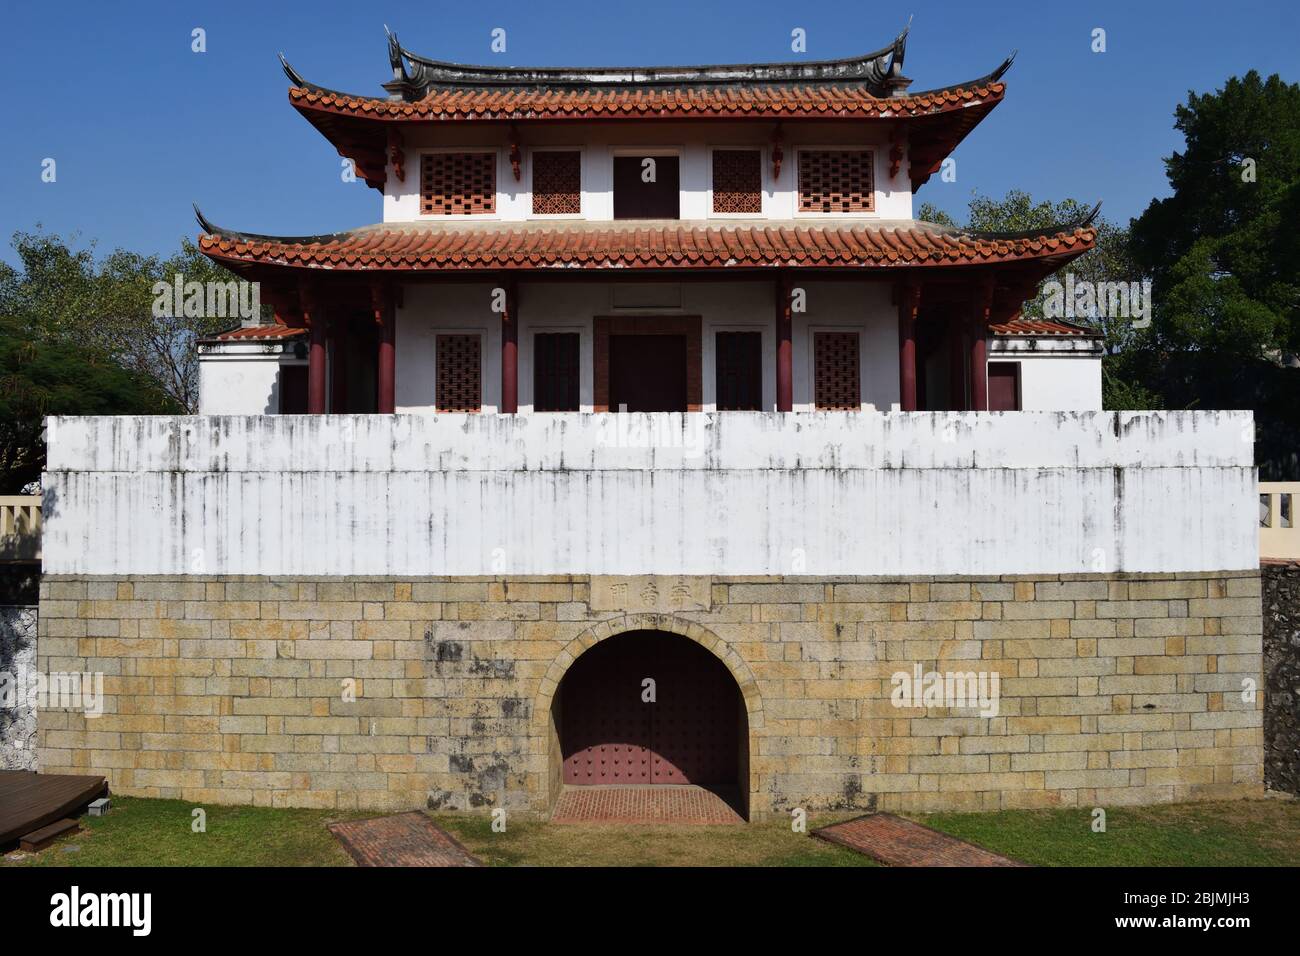 Historisches großes Südtor der Stadt Tainan, Taiwan. Inschrift: 寧南門 'Tor des befriedeten Südens' Stockfoto